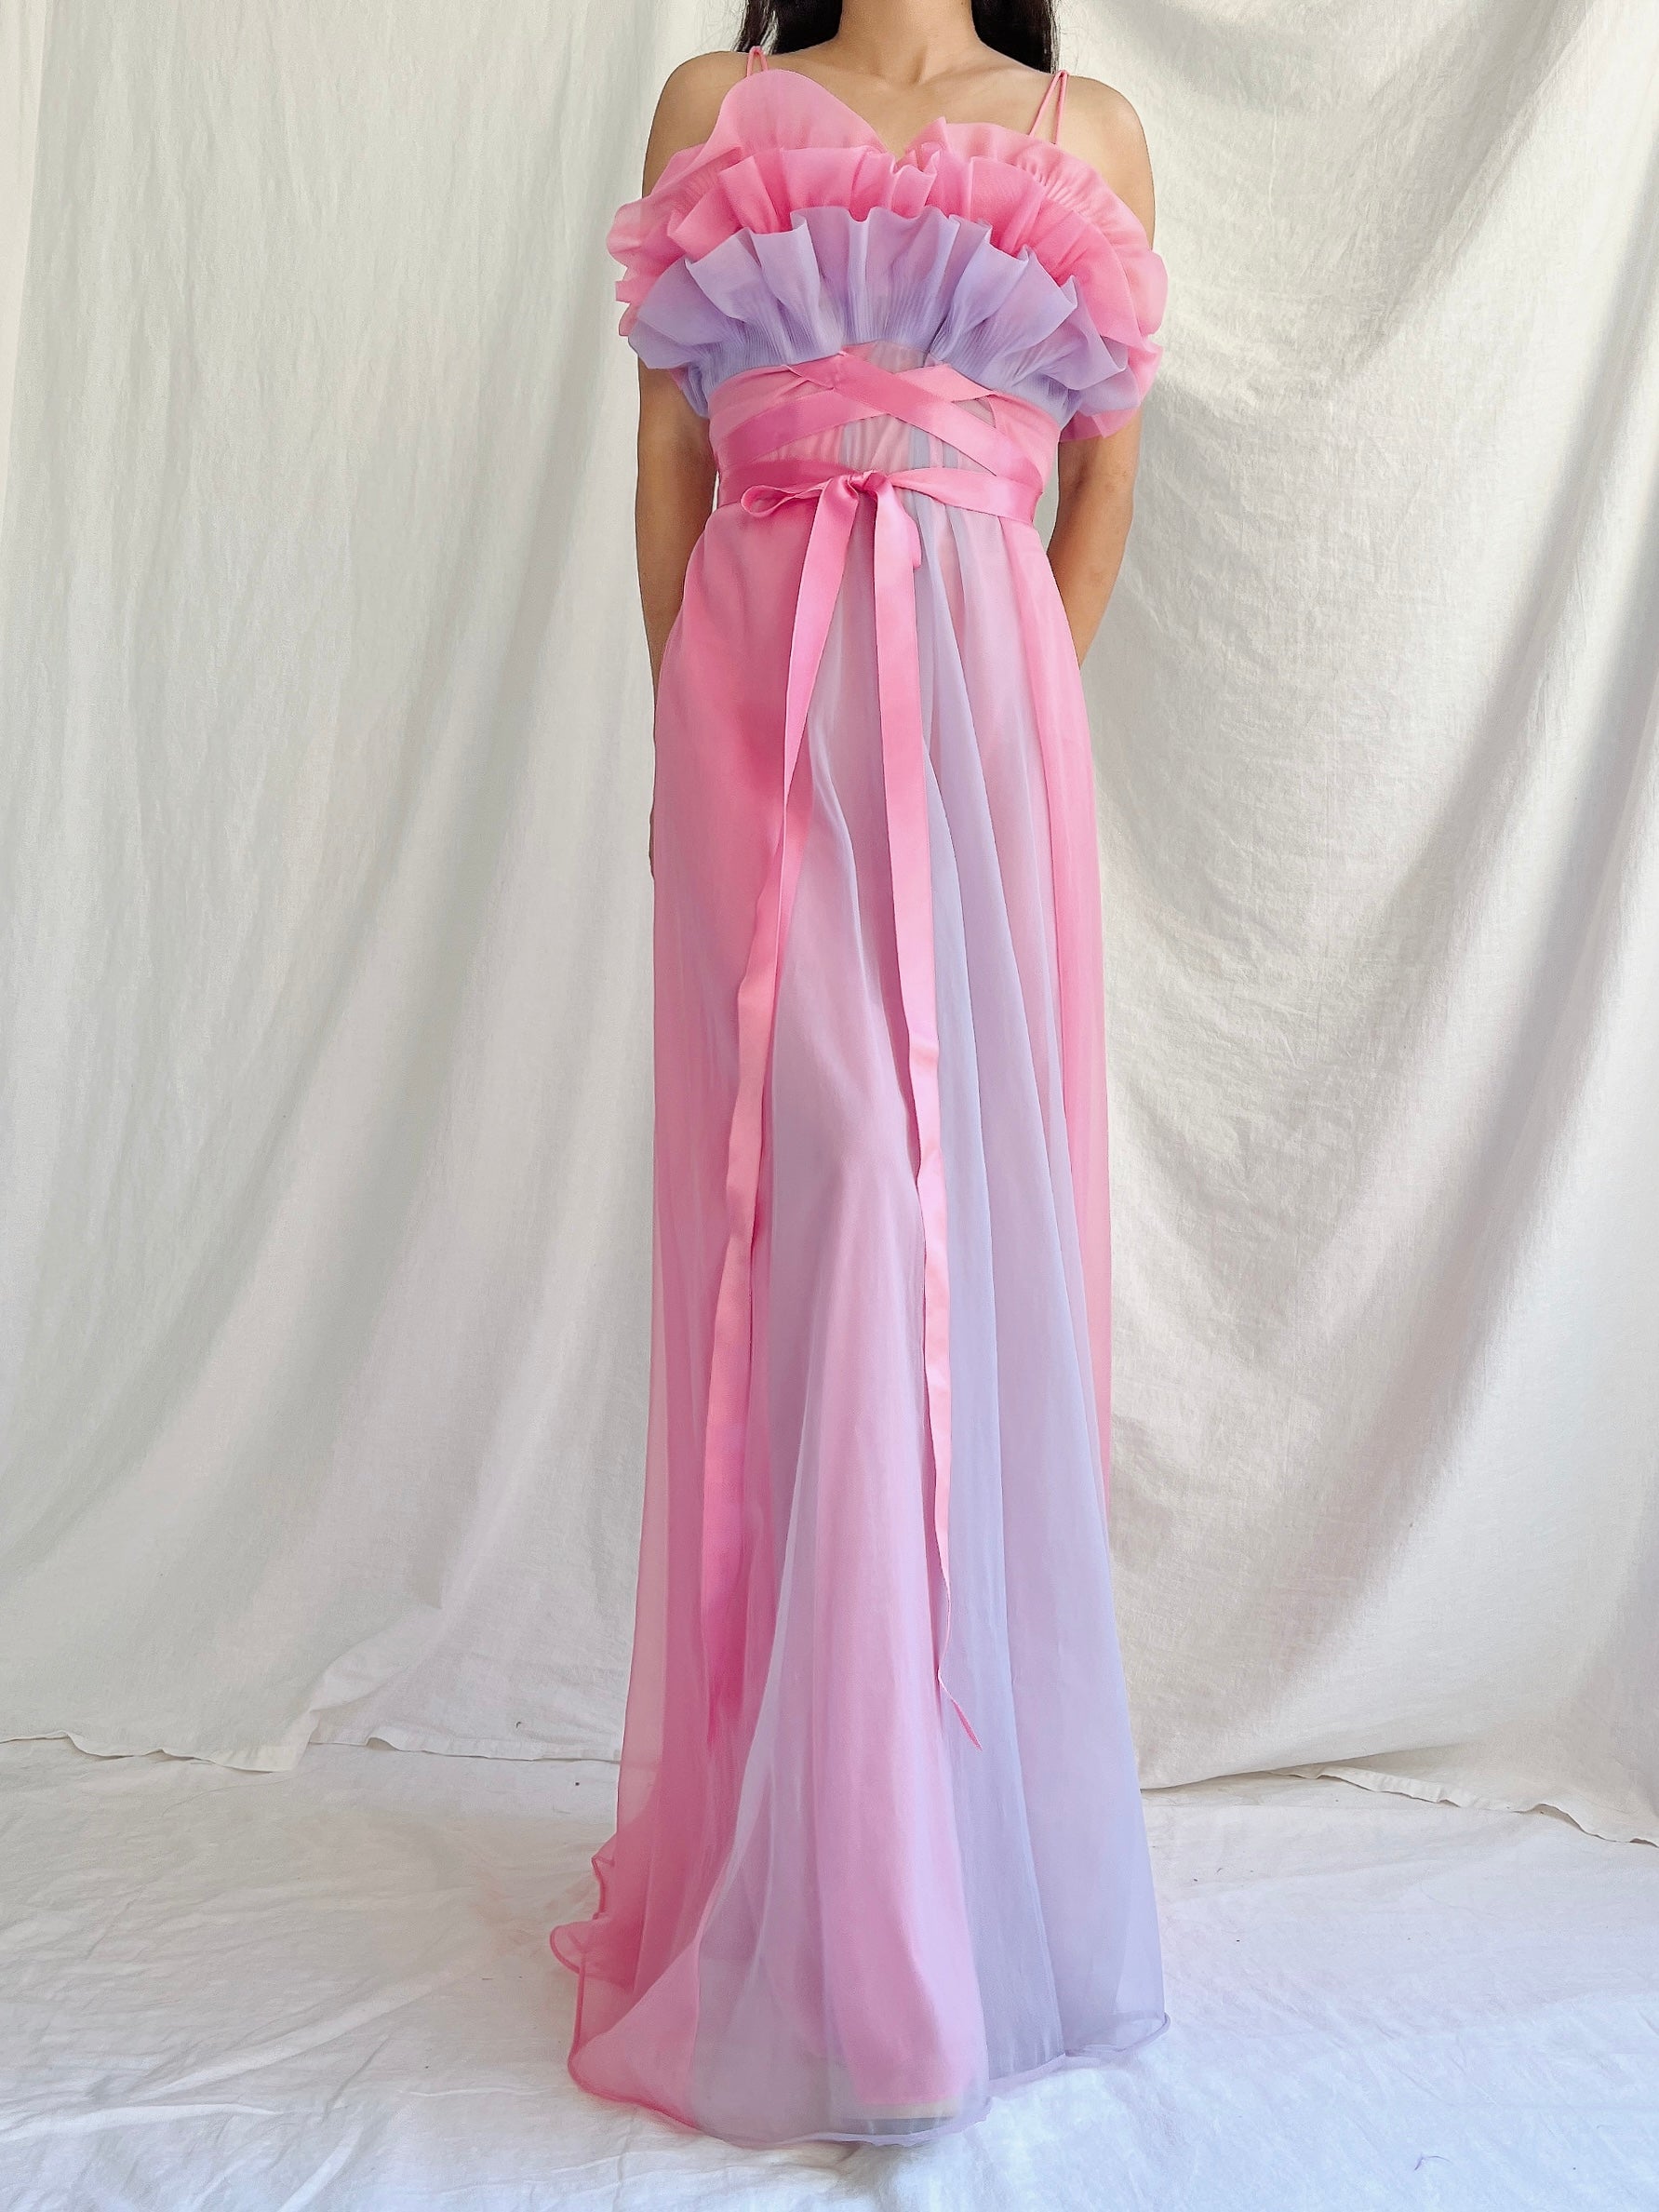 1950s Nylon Petal Bust Dress - S